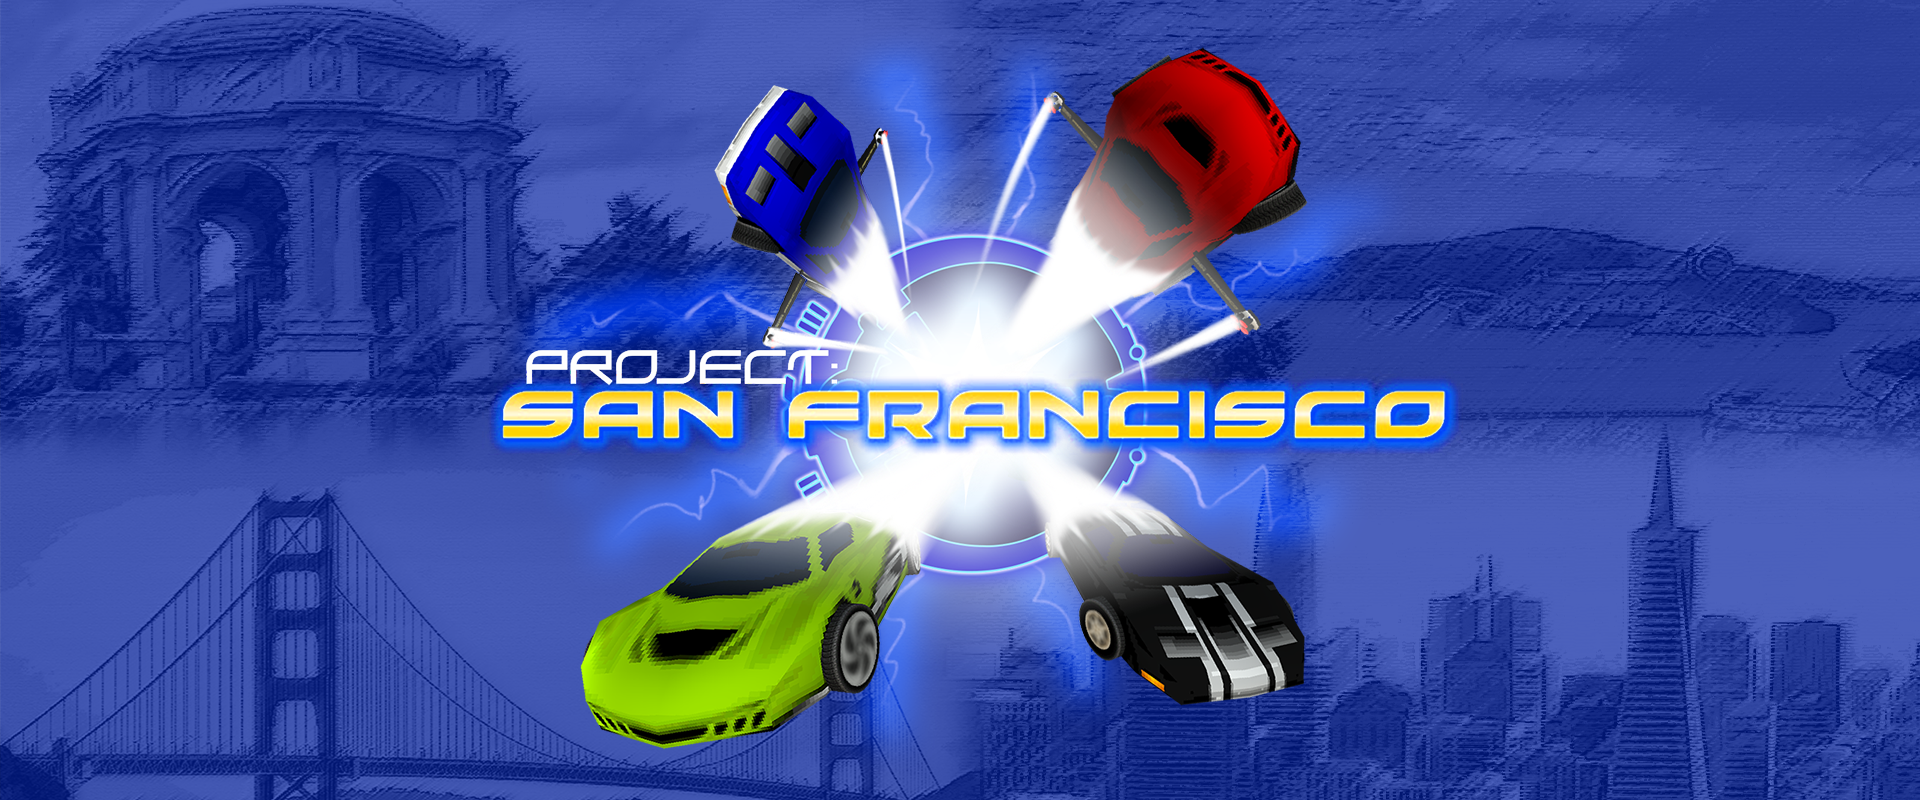 Project San Francisco